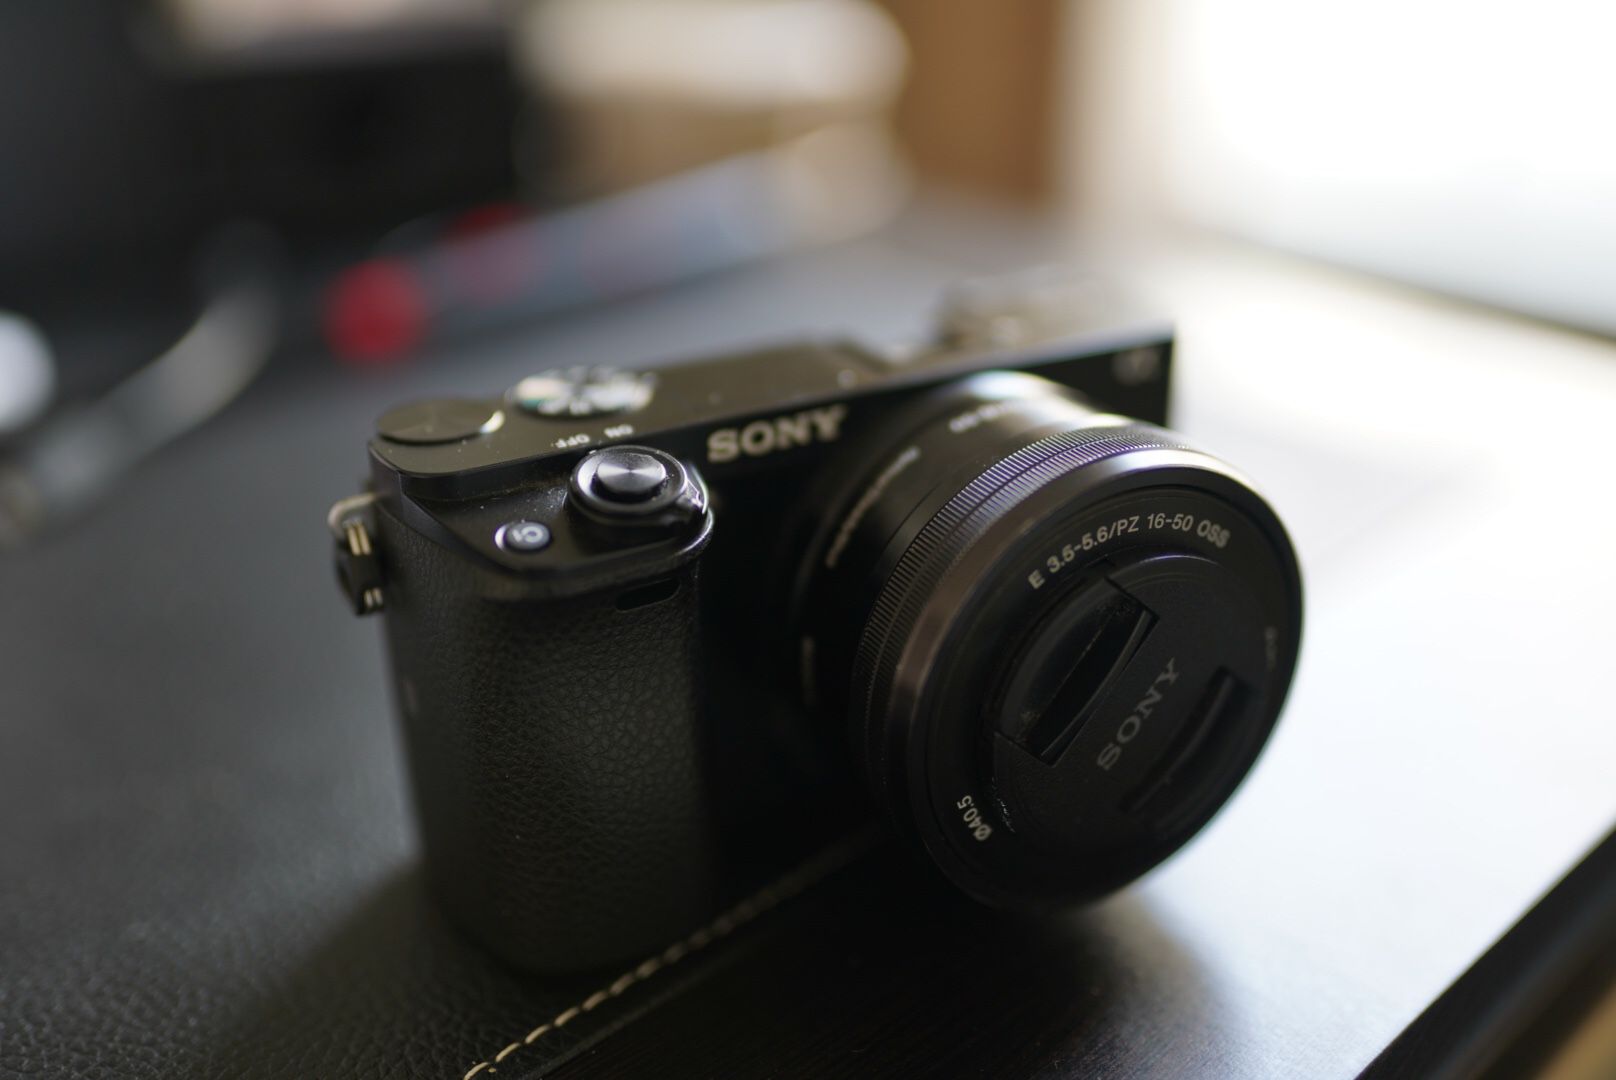 Sony a6000 w/16-50mm kit lens